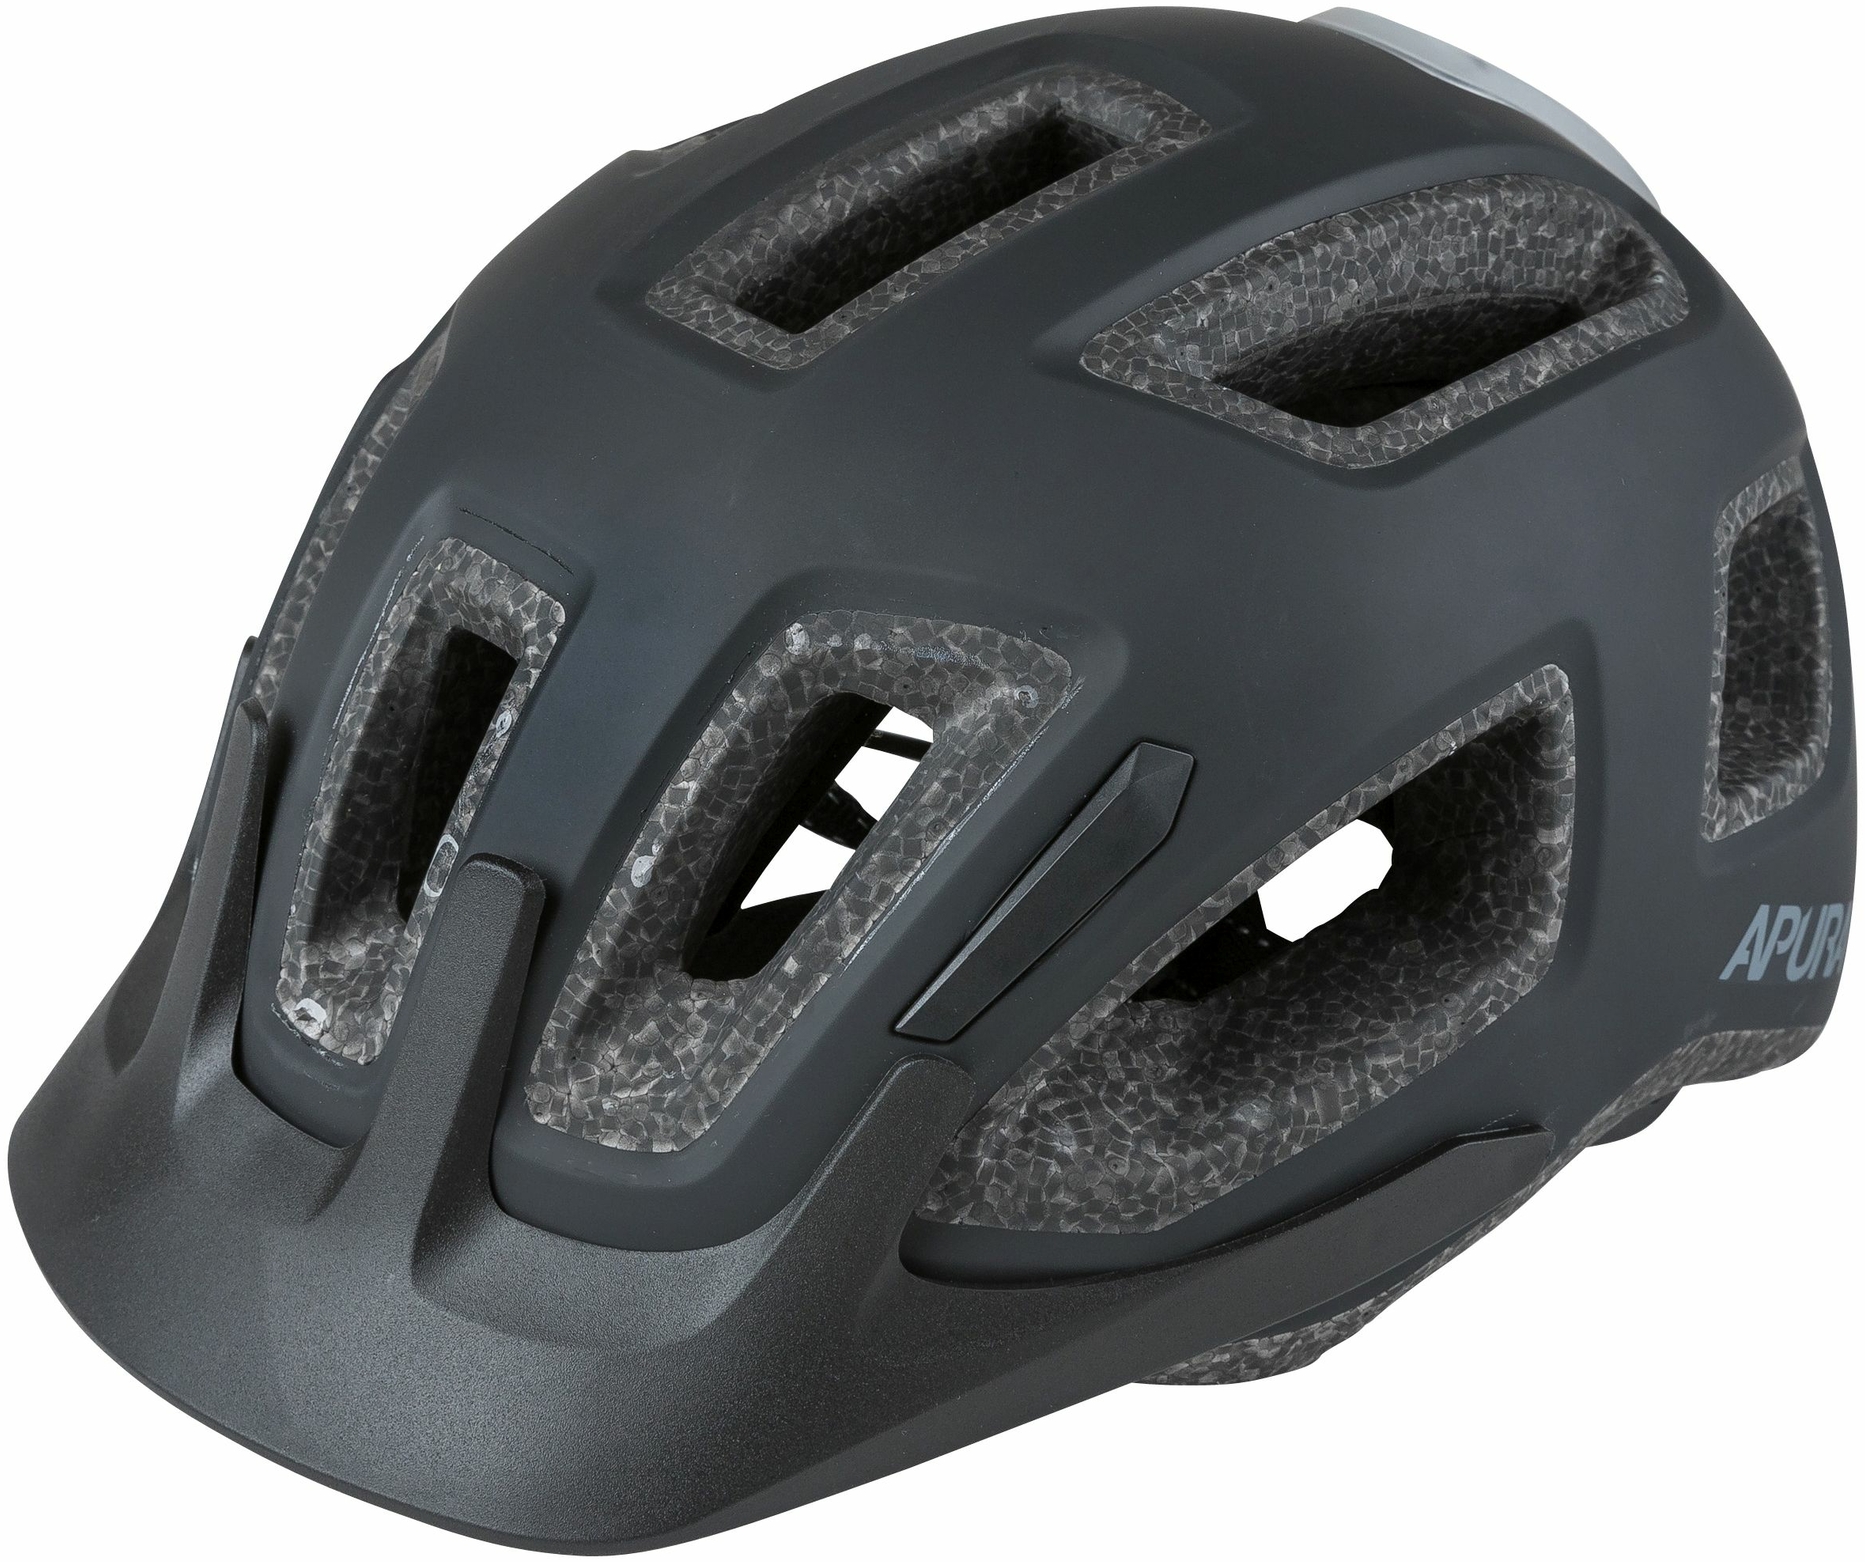 Bekleidung/Helme: Apura  Unisex Helm OSLO 54-58 cm 